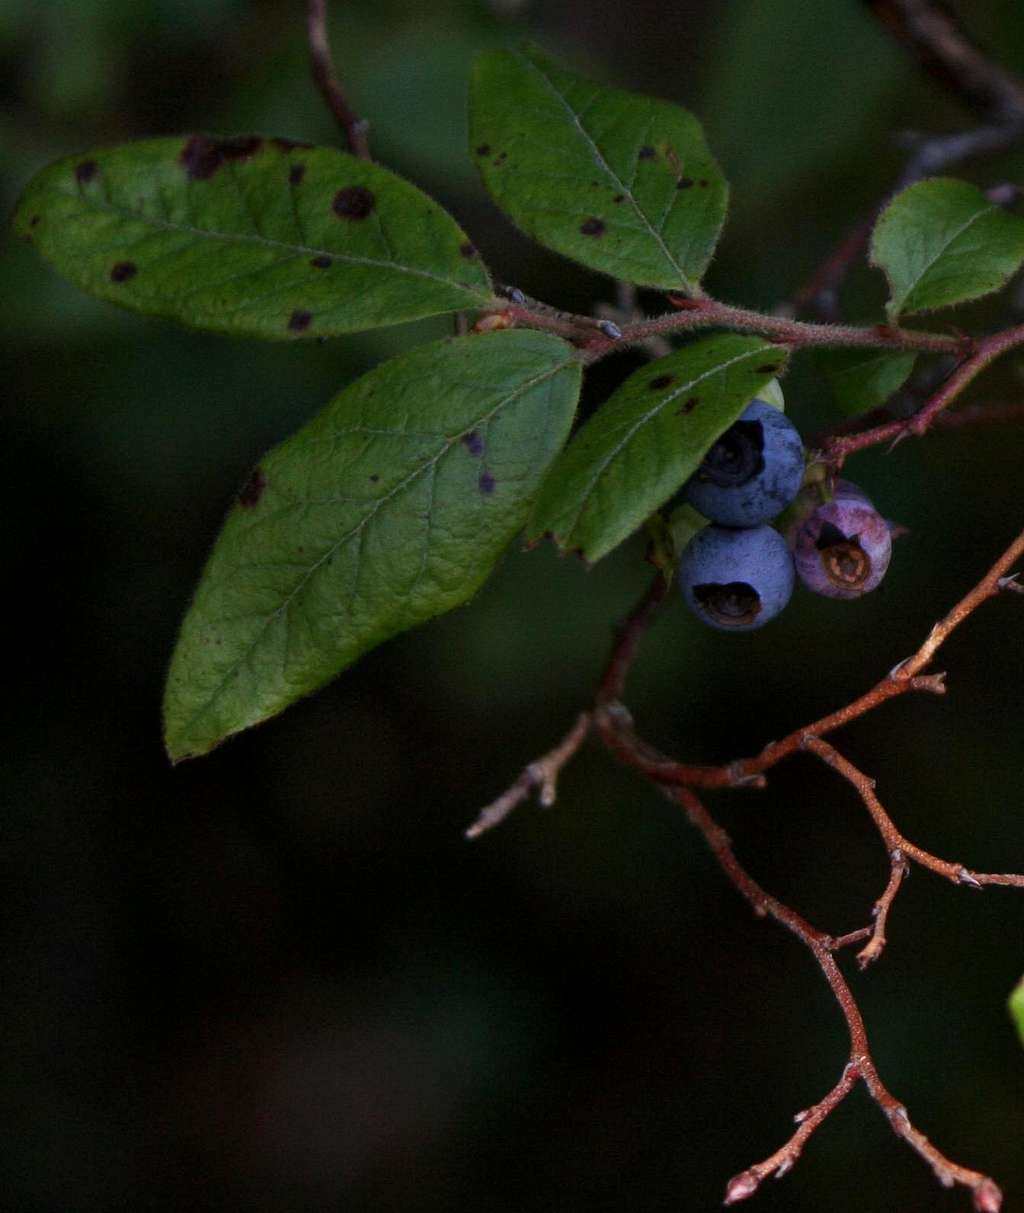 Blueberries!